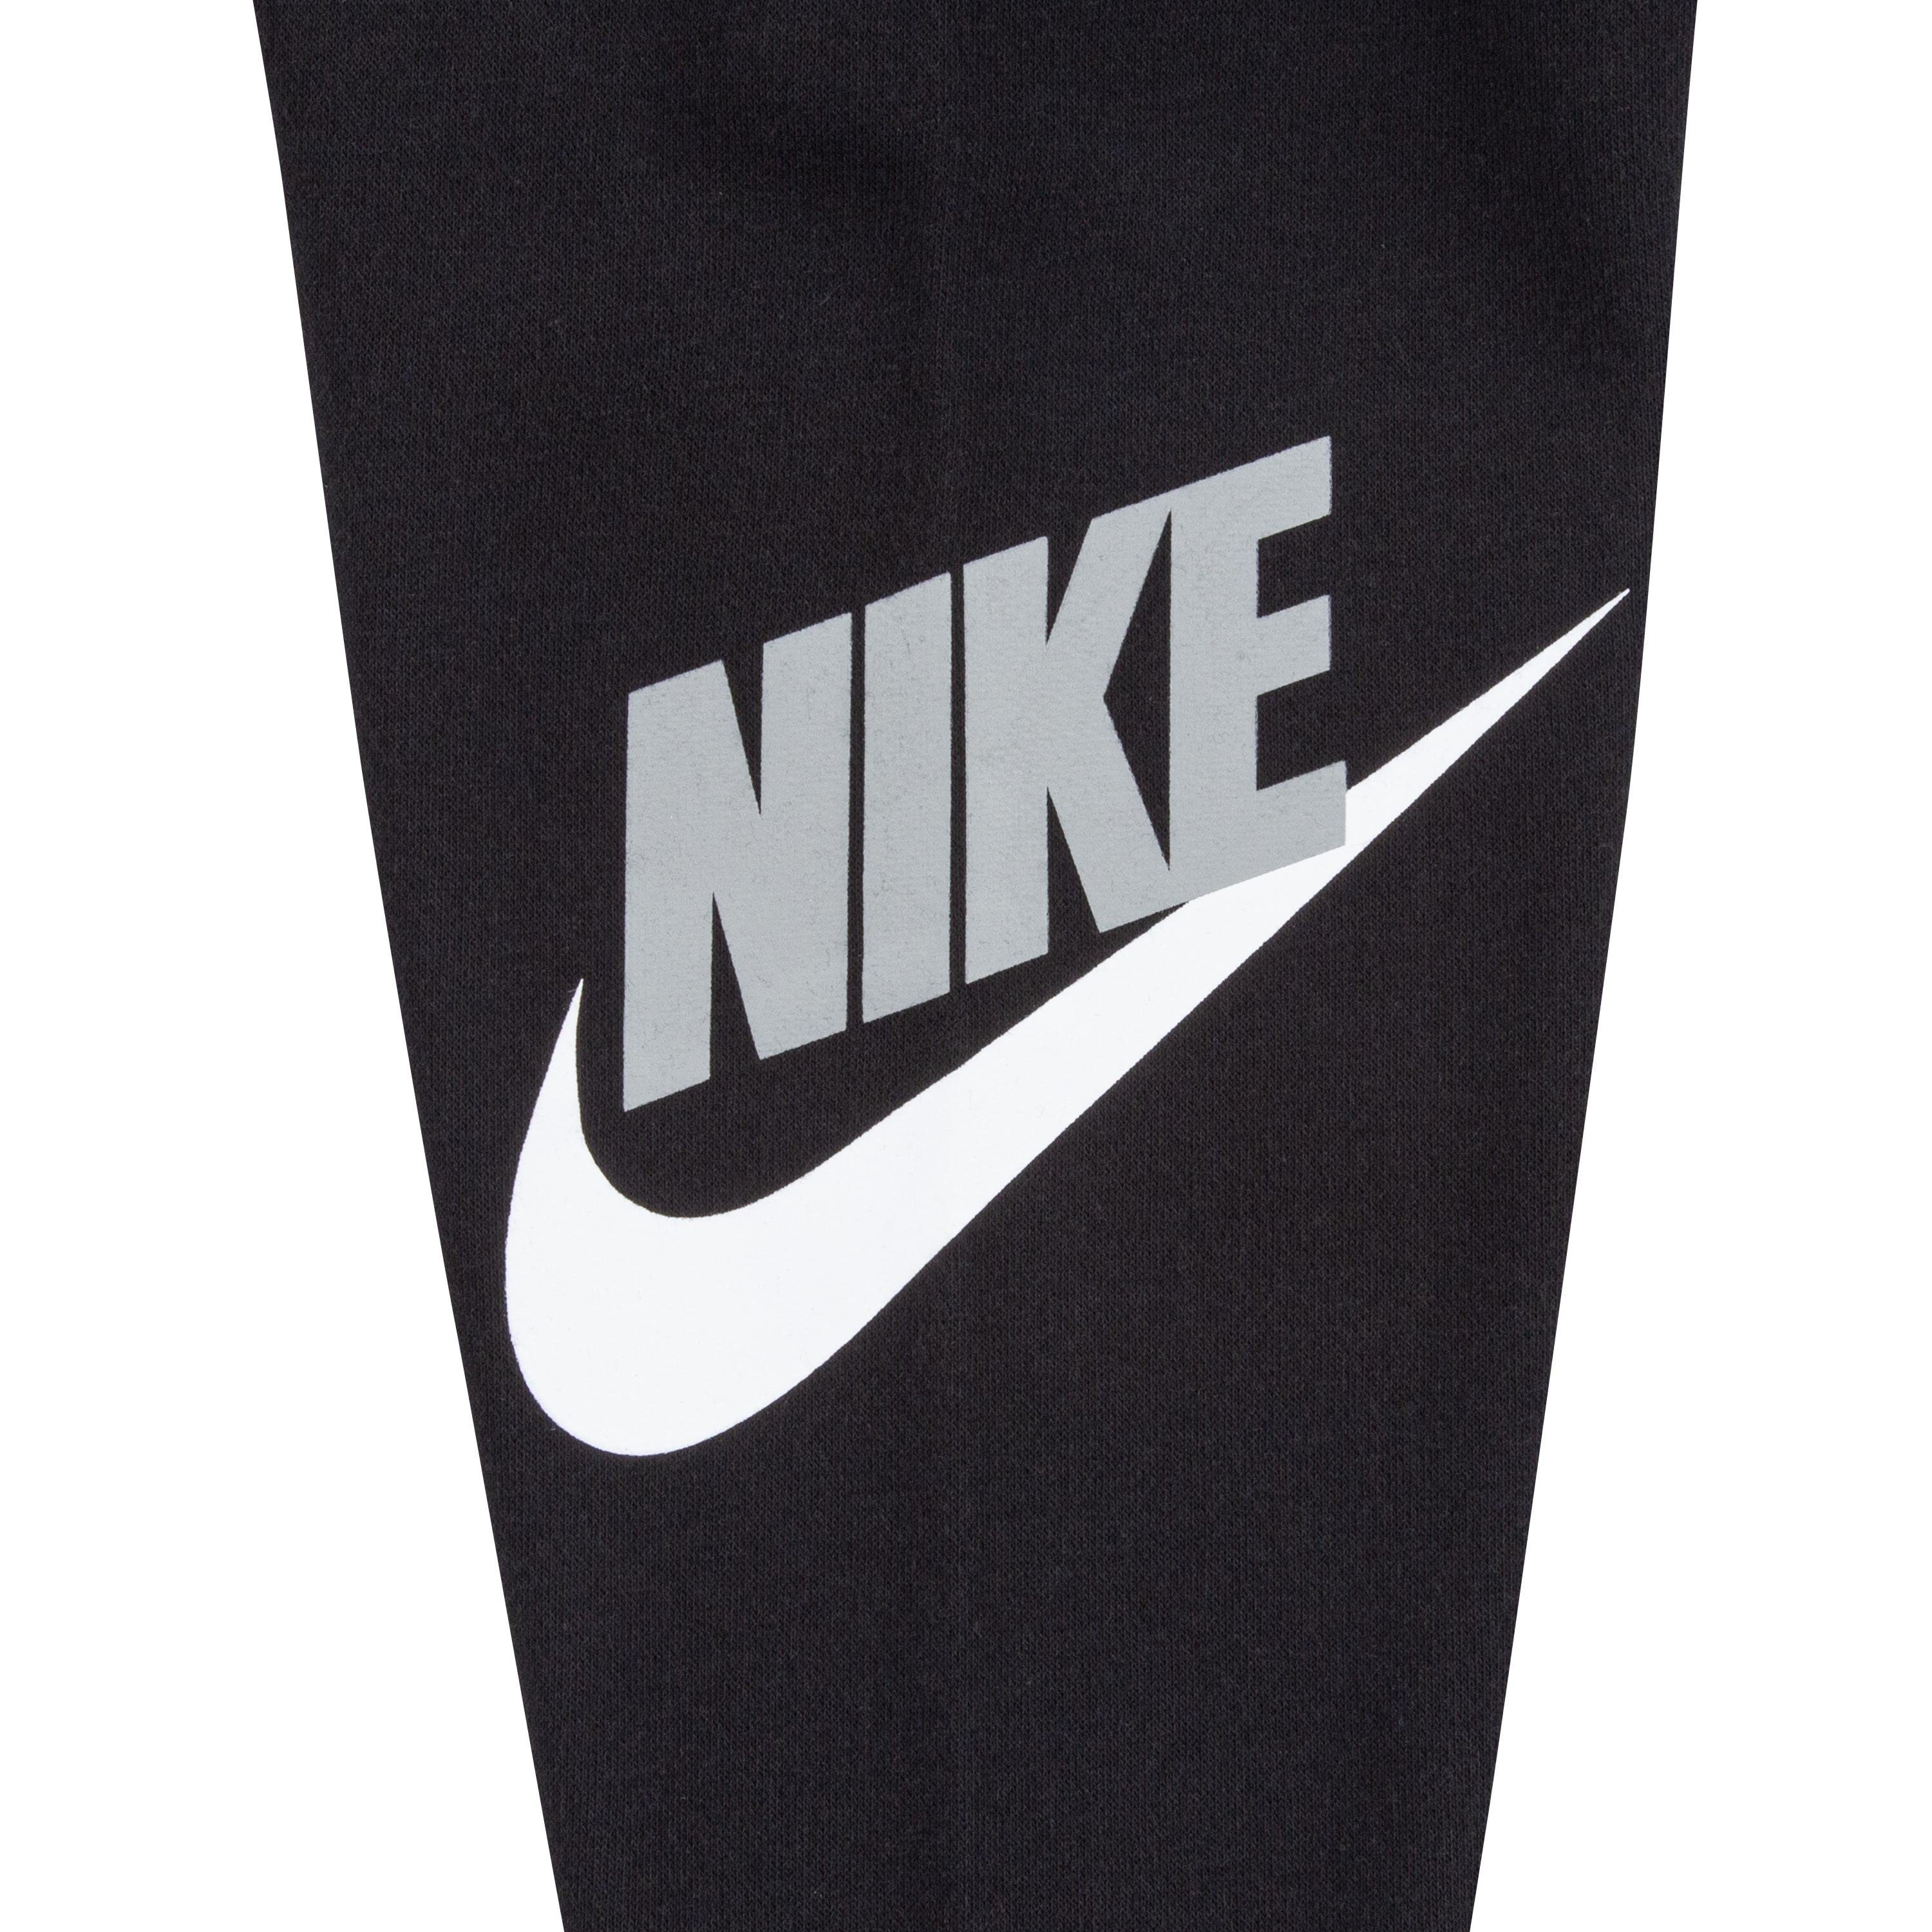 Nike PO SET Jogginganzug 2-tlg) JOGGER & schwarz 2PC FLEECE HOODIE Sportswear (Set,